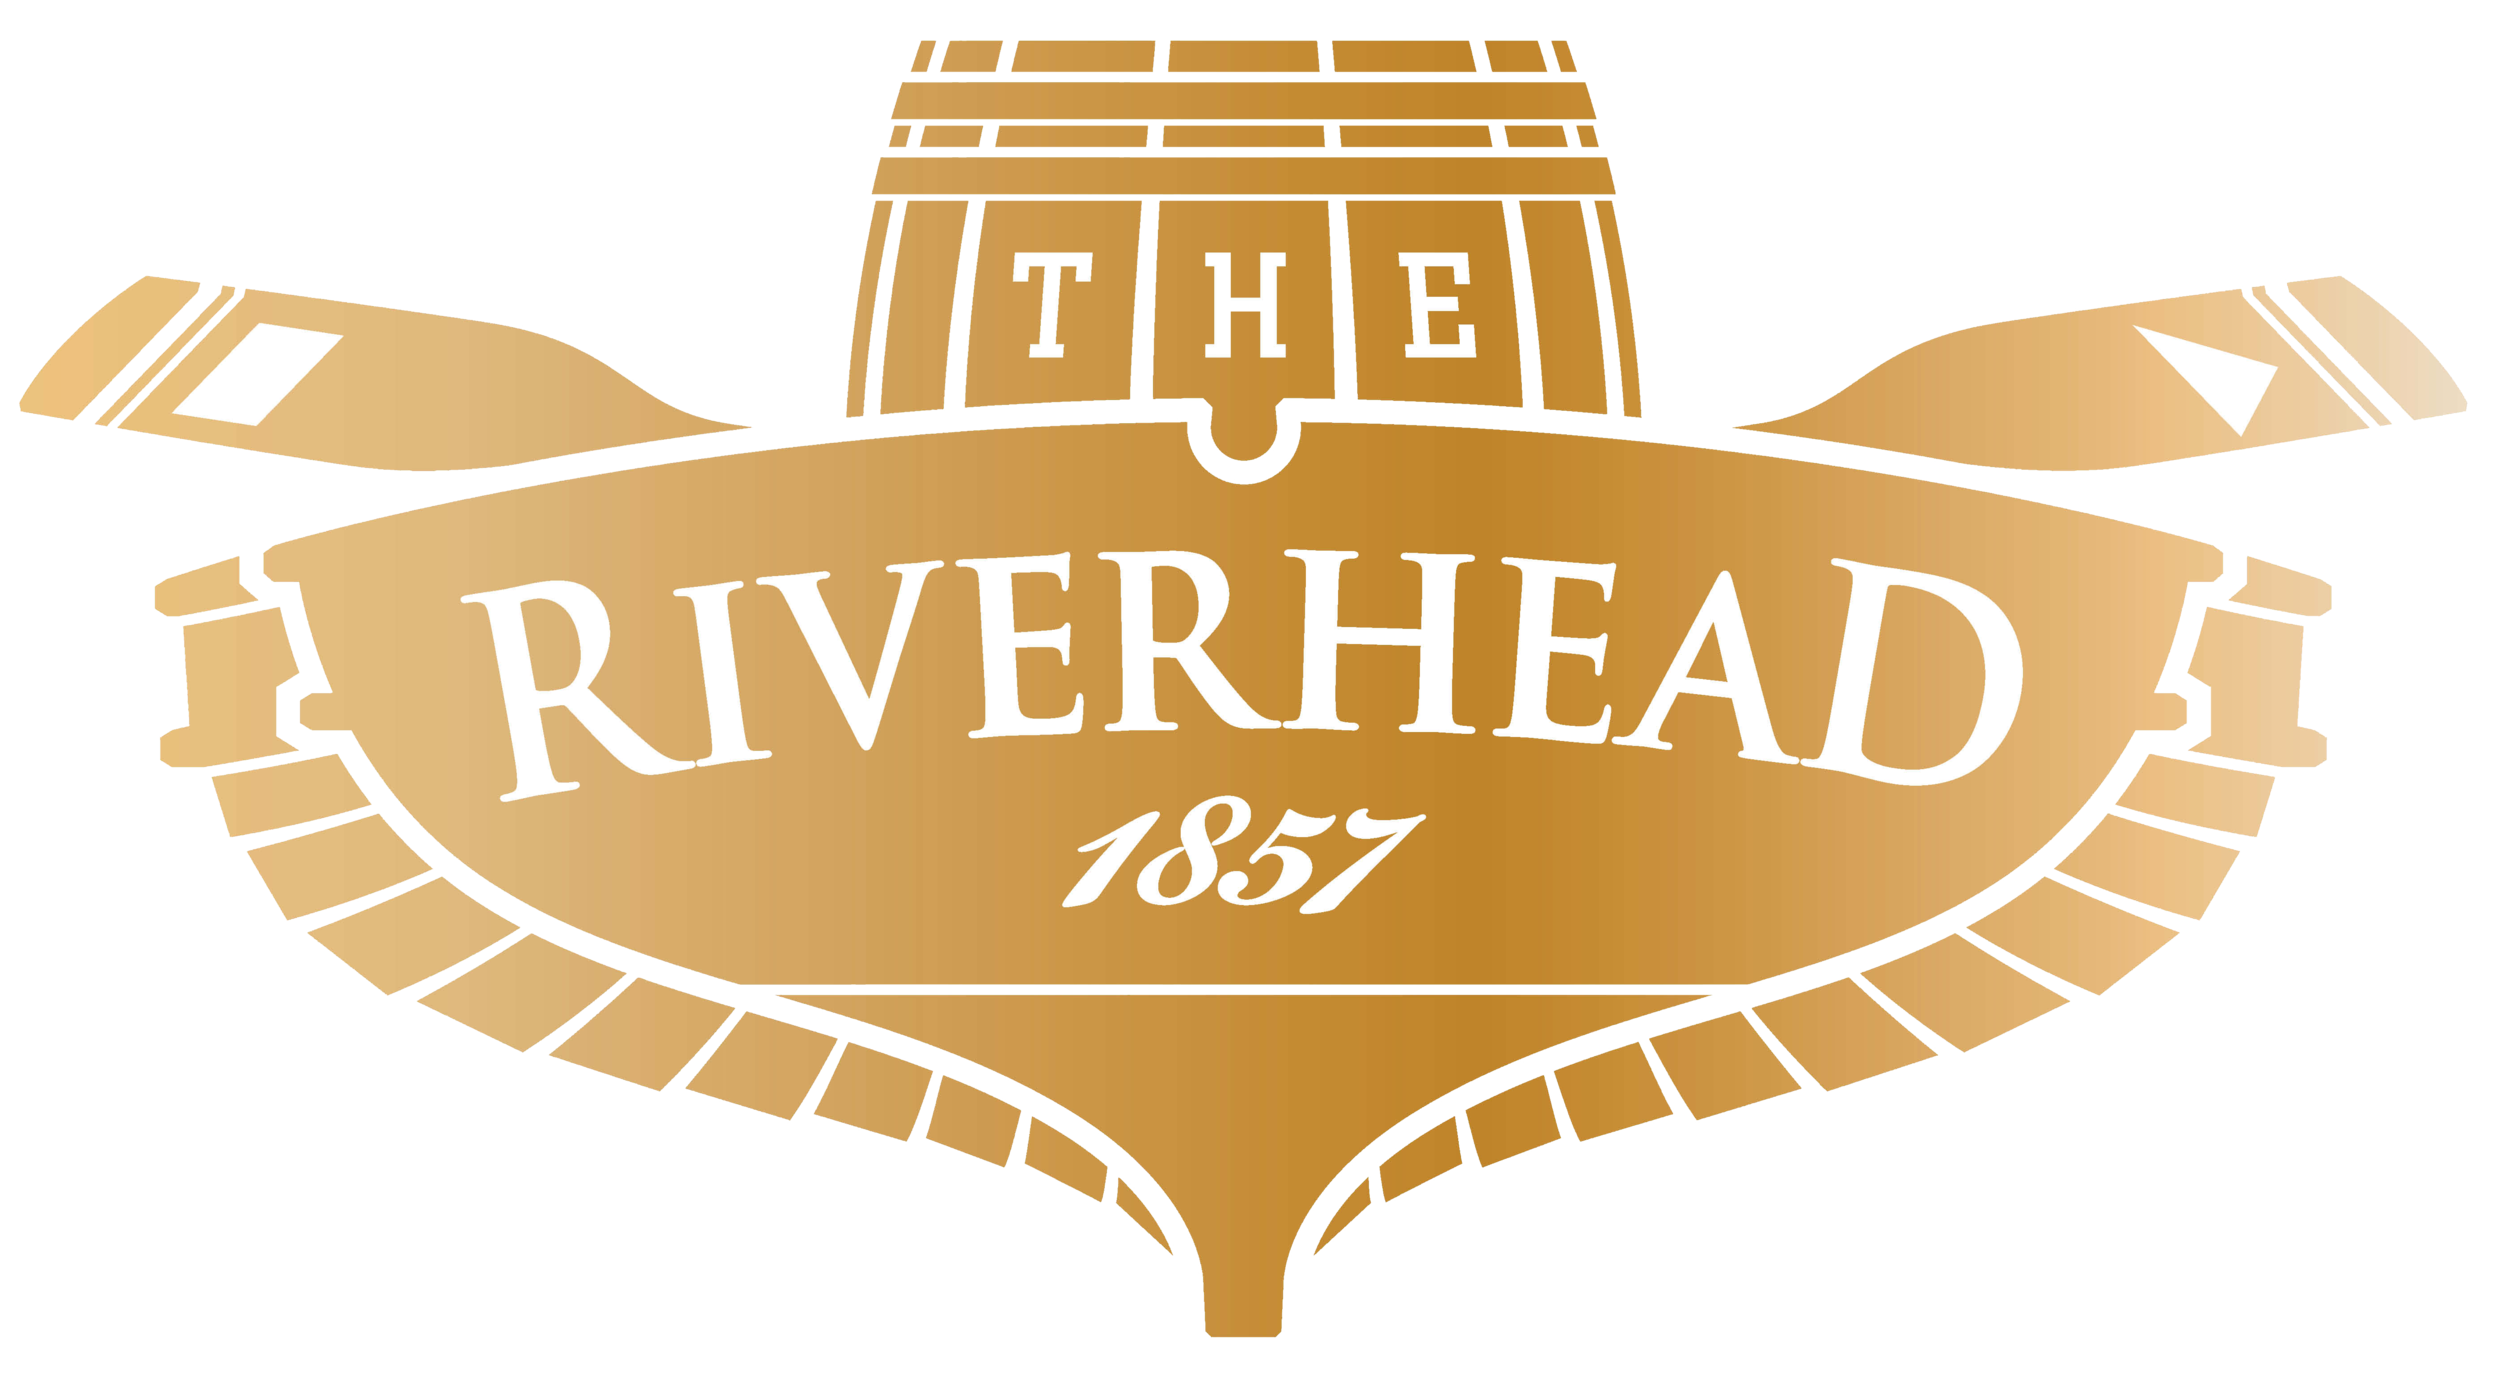 The Riverhead